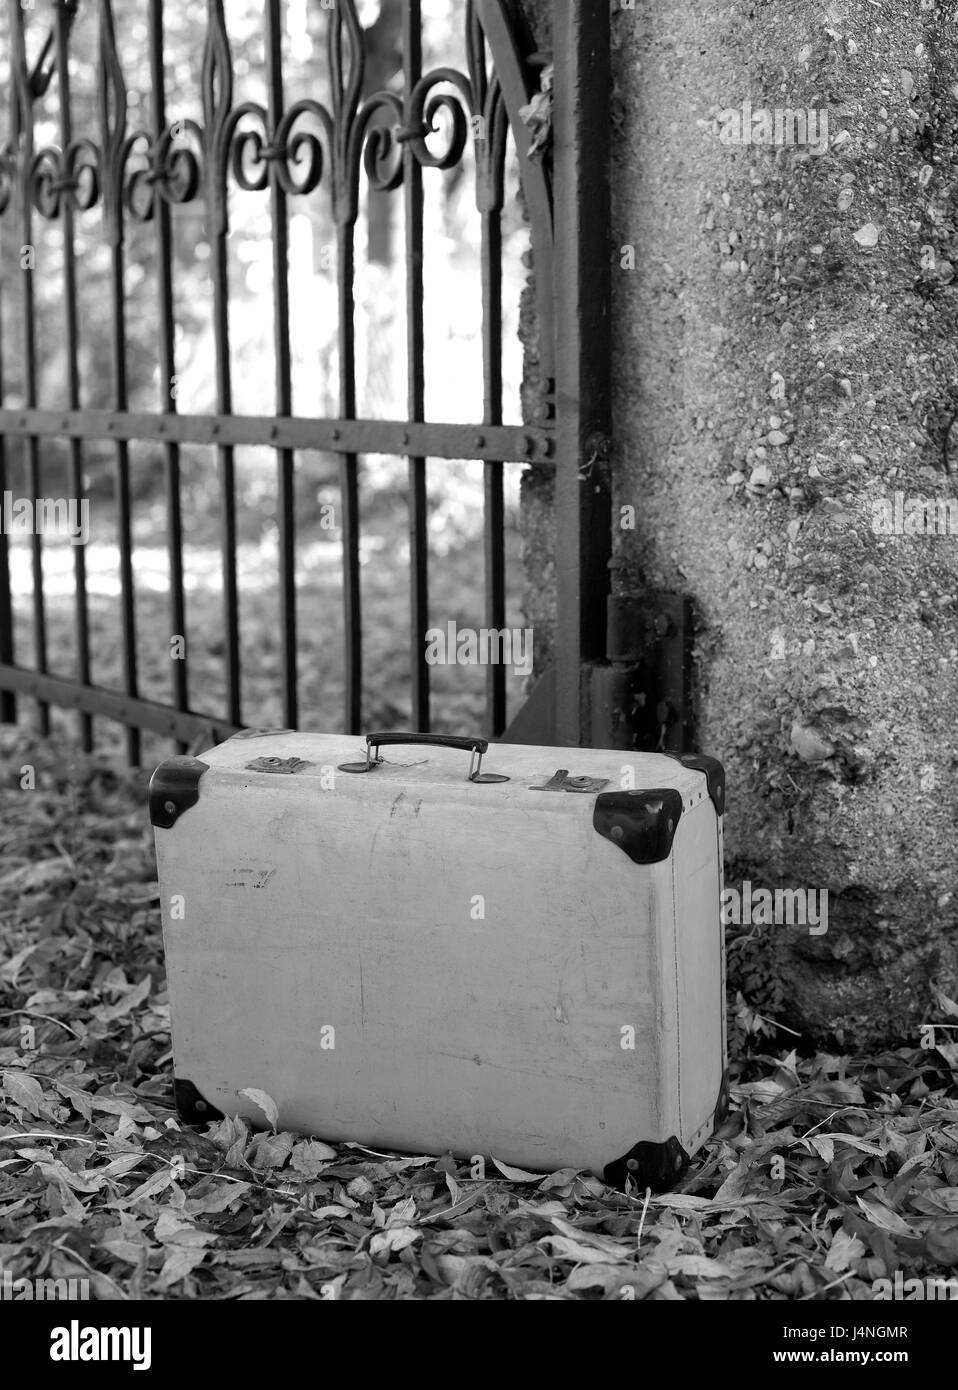 Iron gate, suitcase, outside, s/w, Stock Photo